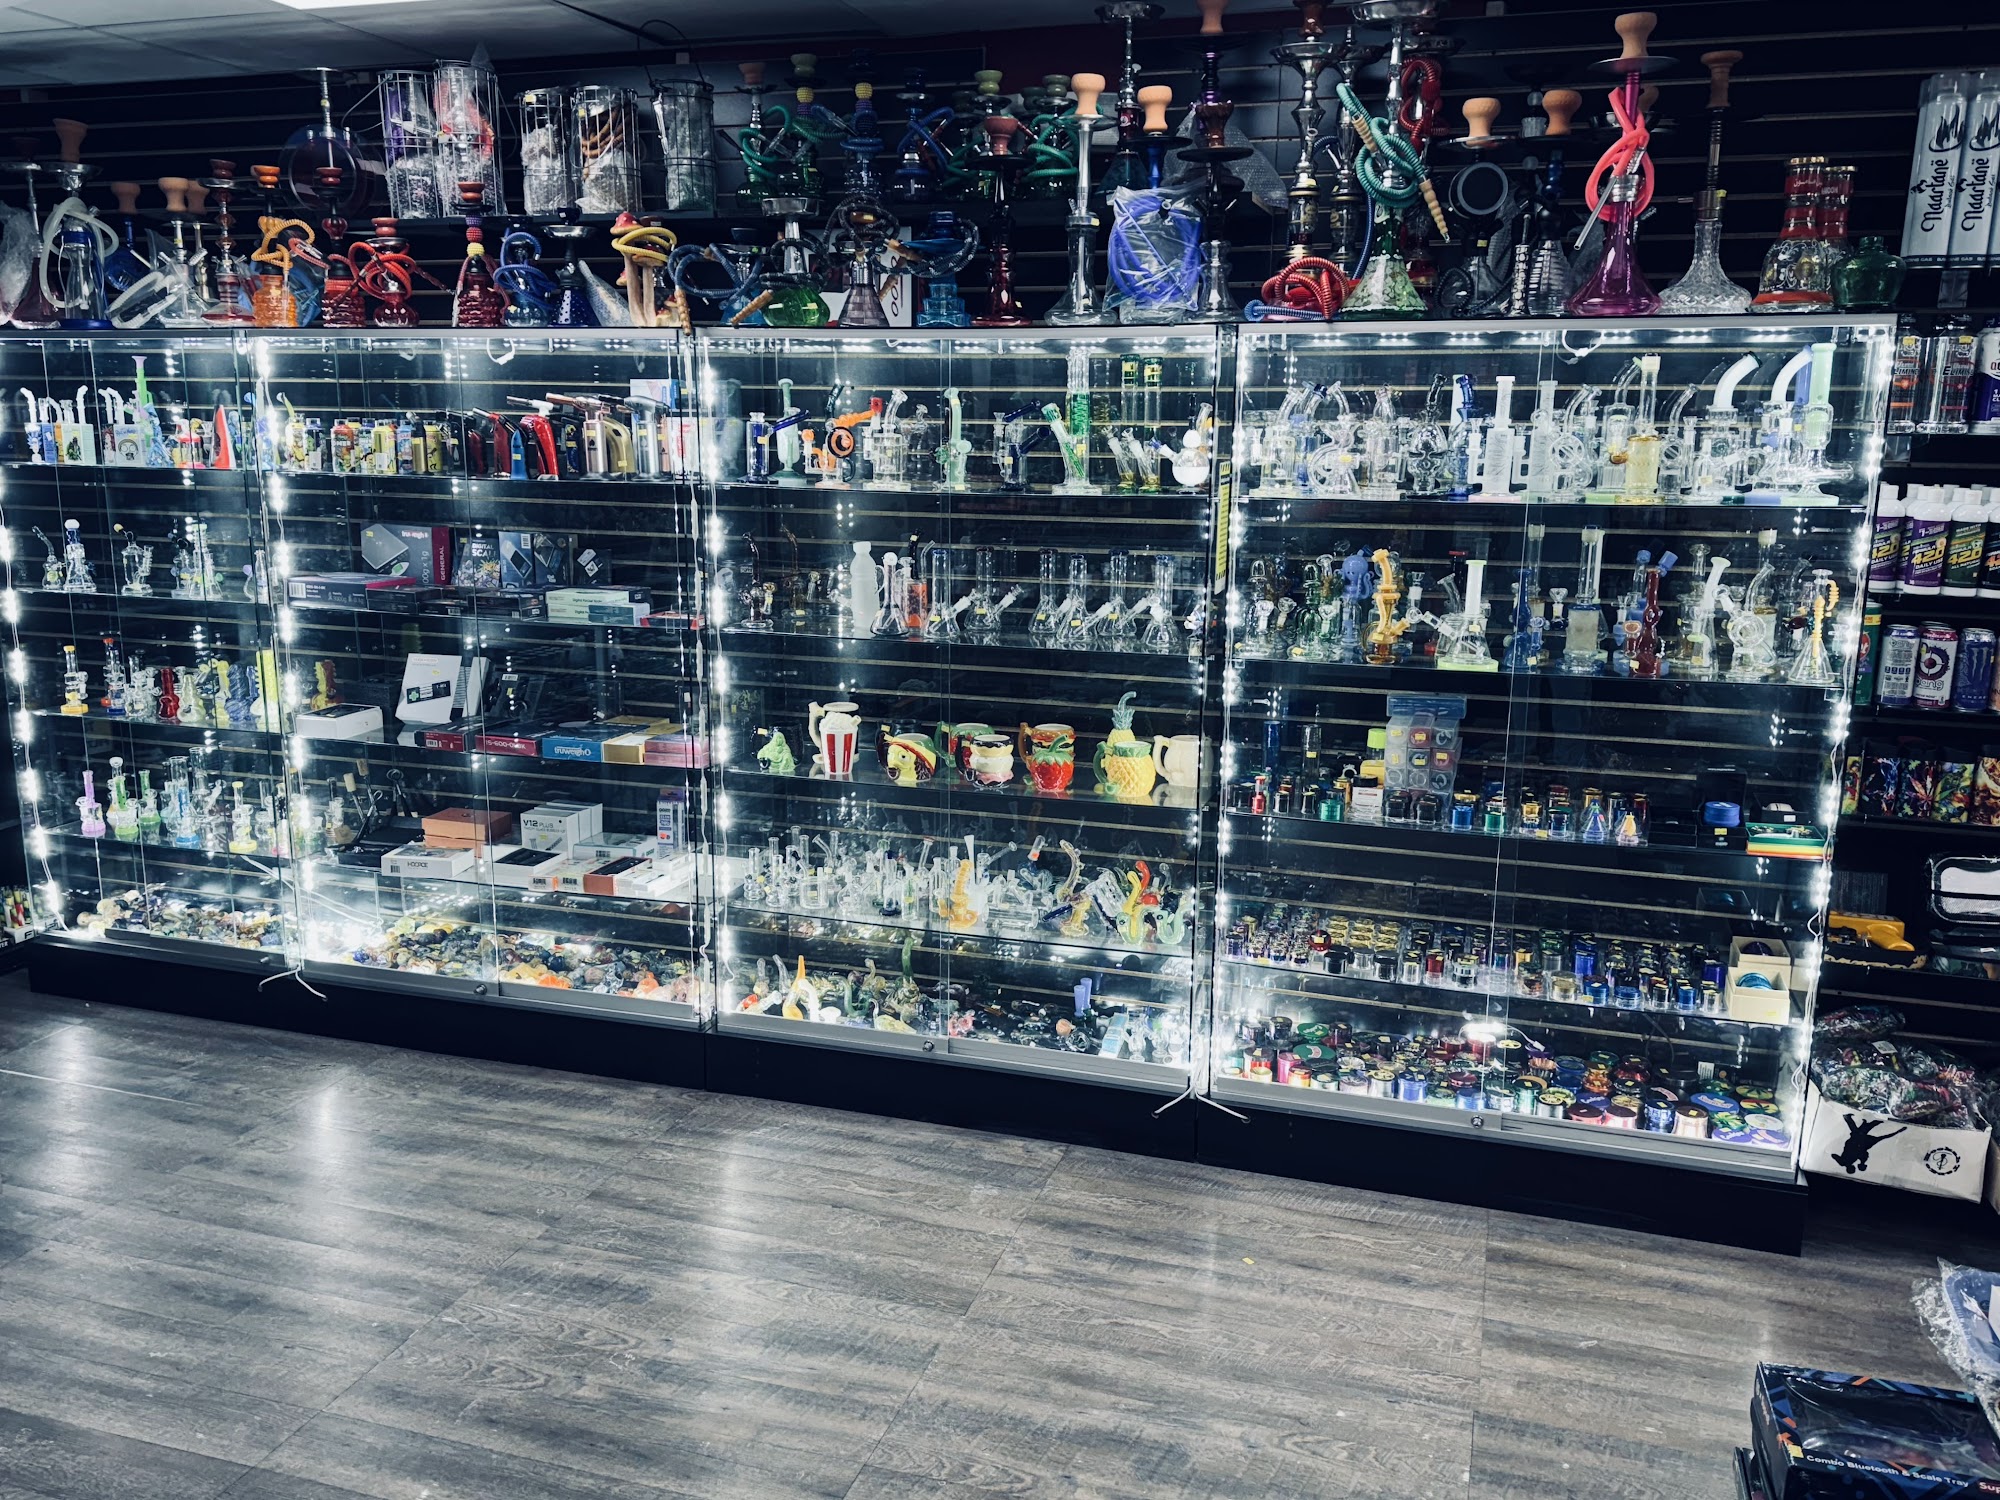 Miles Smoke Shop (Premium Cigars, Disposable Vapes, E-juice, Hookah , Glass)